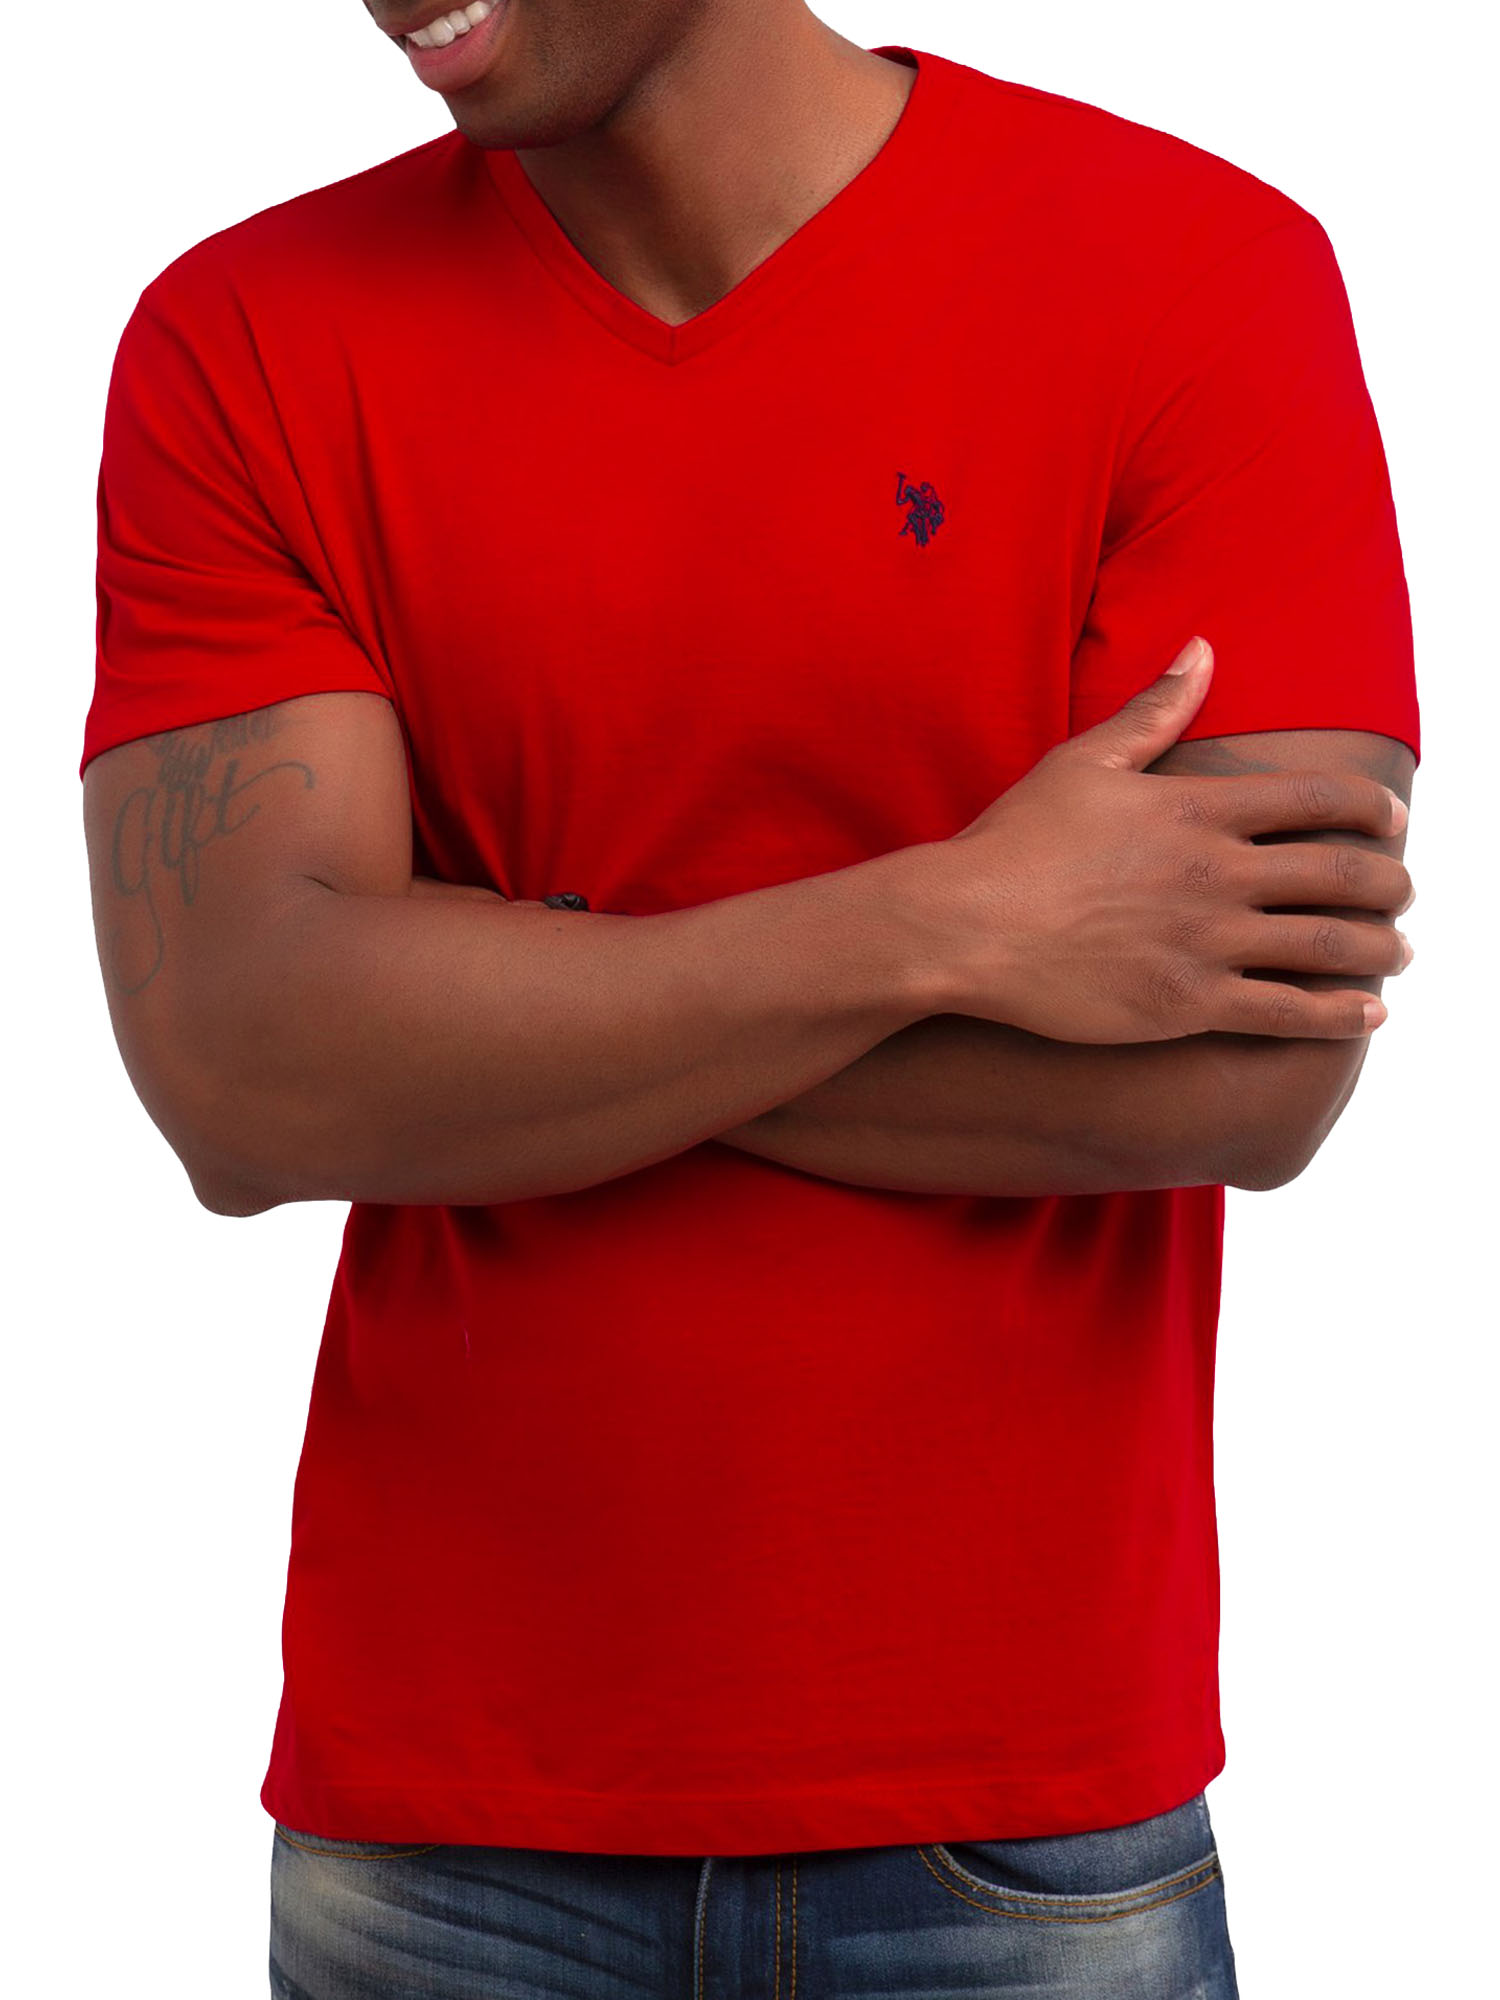 U.S. Polo Assn. Men's V-Neck T-Shirt - image 1 of 1